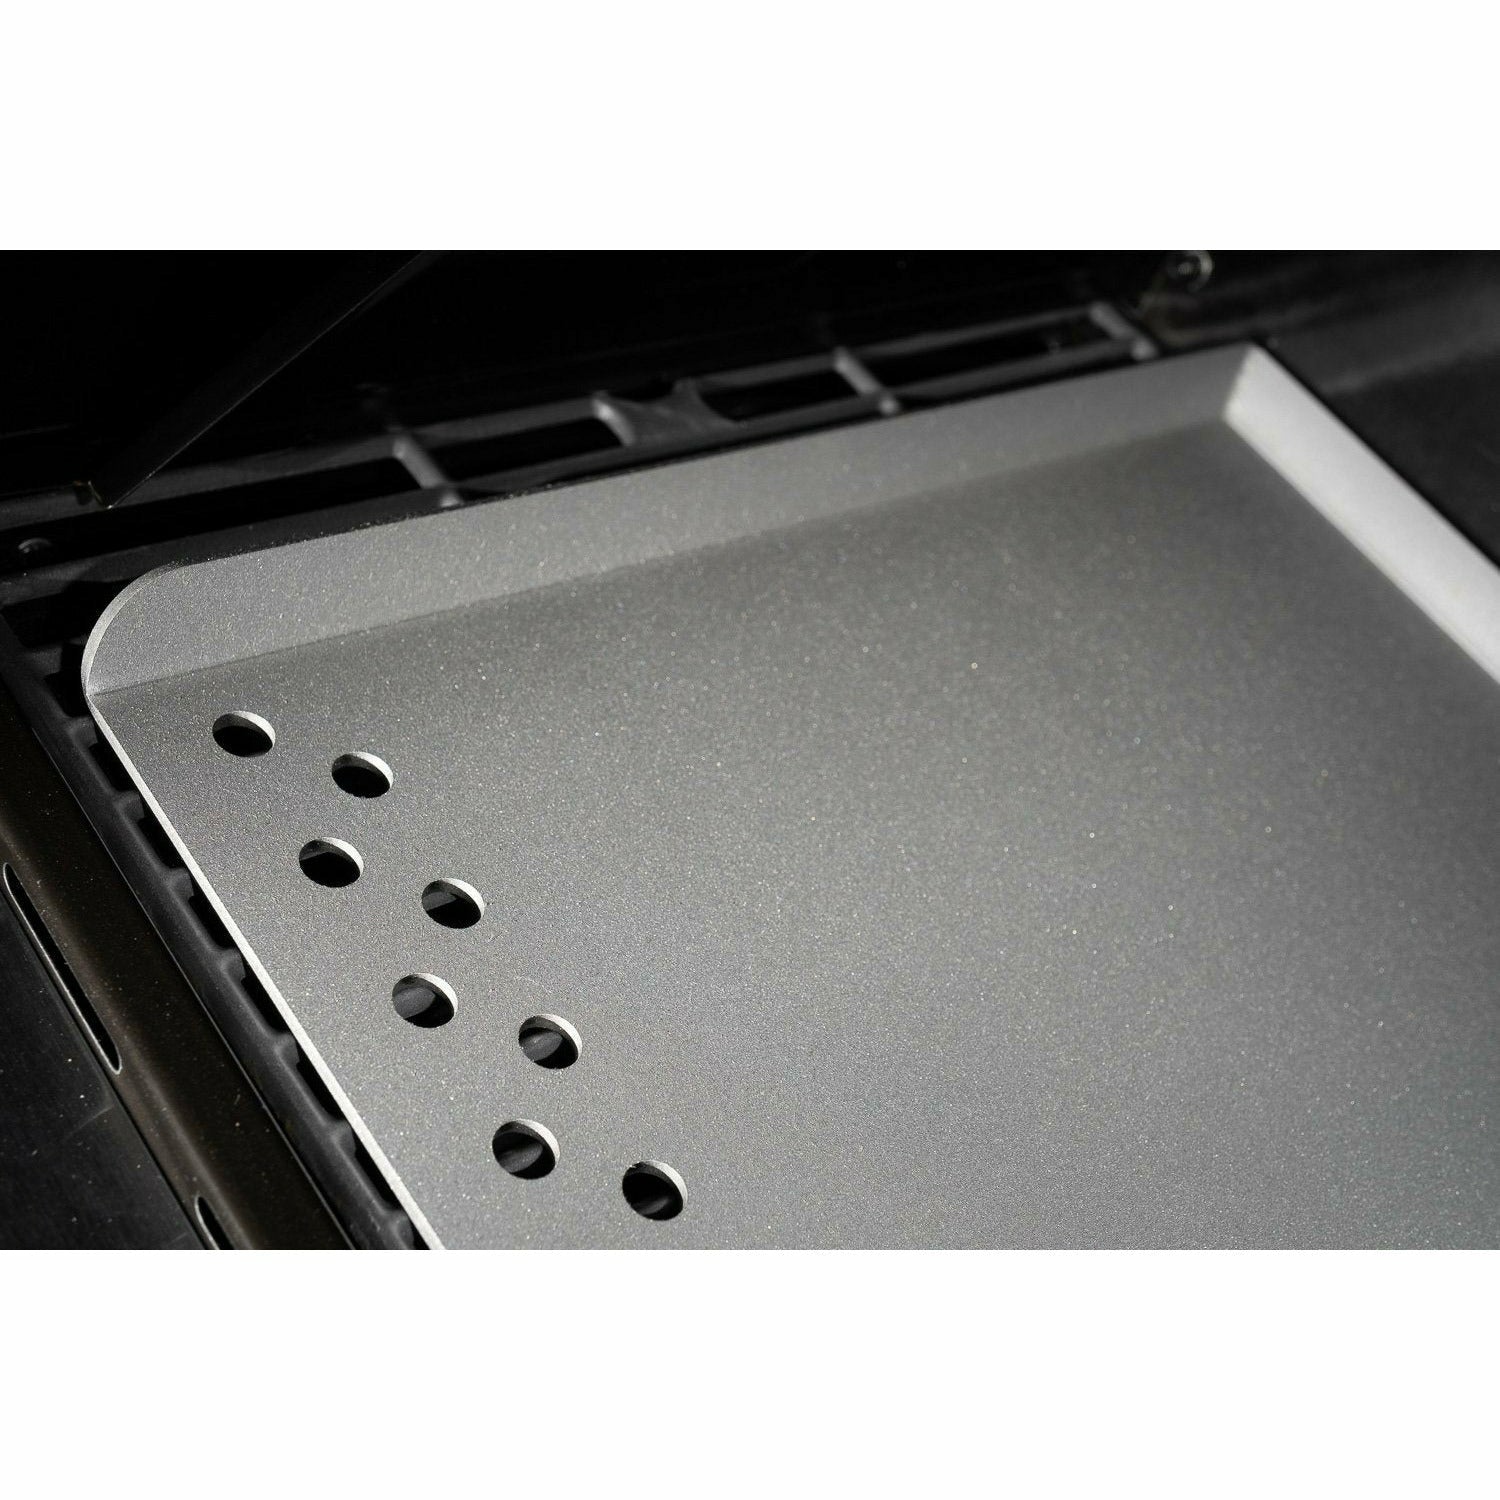 Griddle Insert For Charcoal Grills - Starter Kit - Steelmade